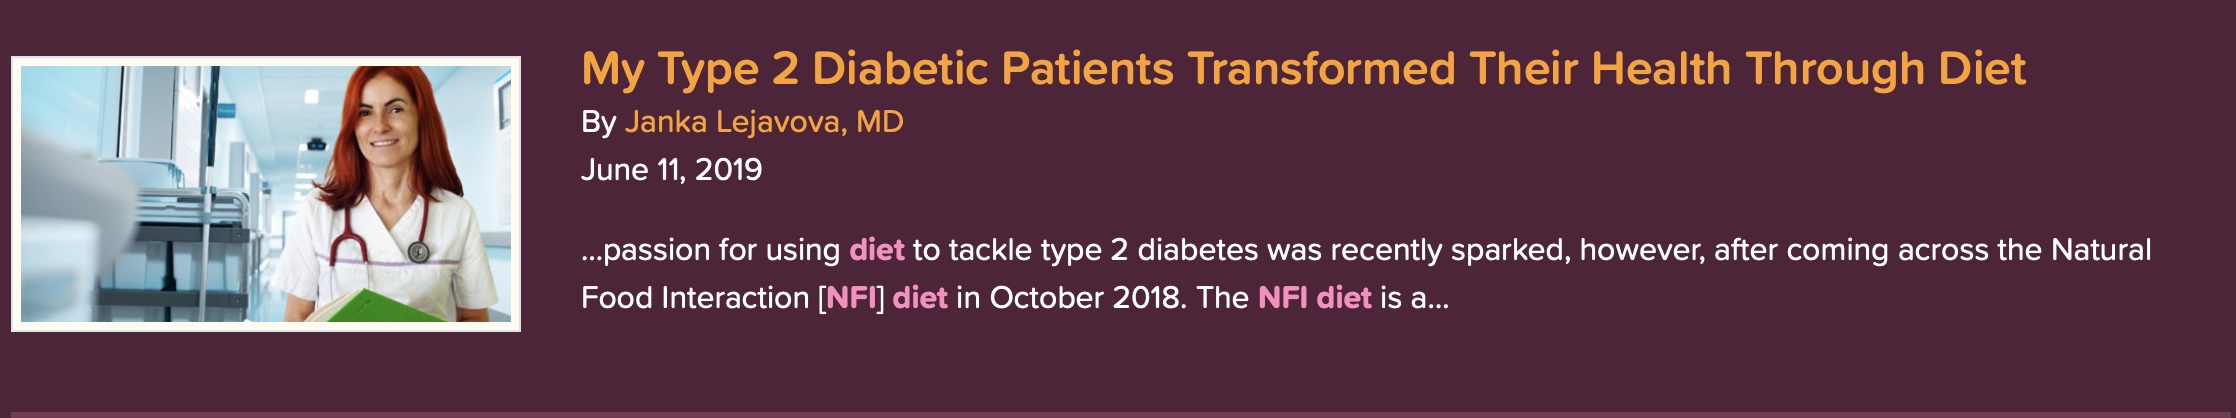 My Type 2 Diabetic Patients Transformed Their Health Through Diet